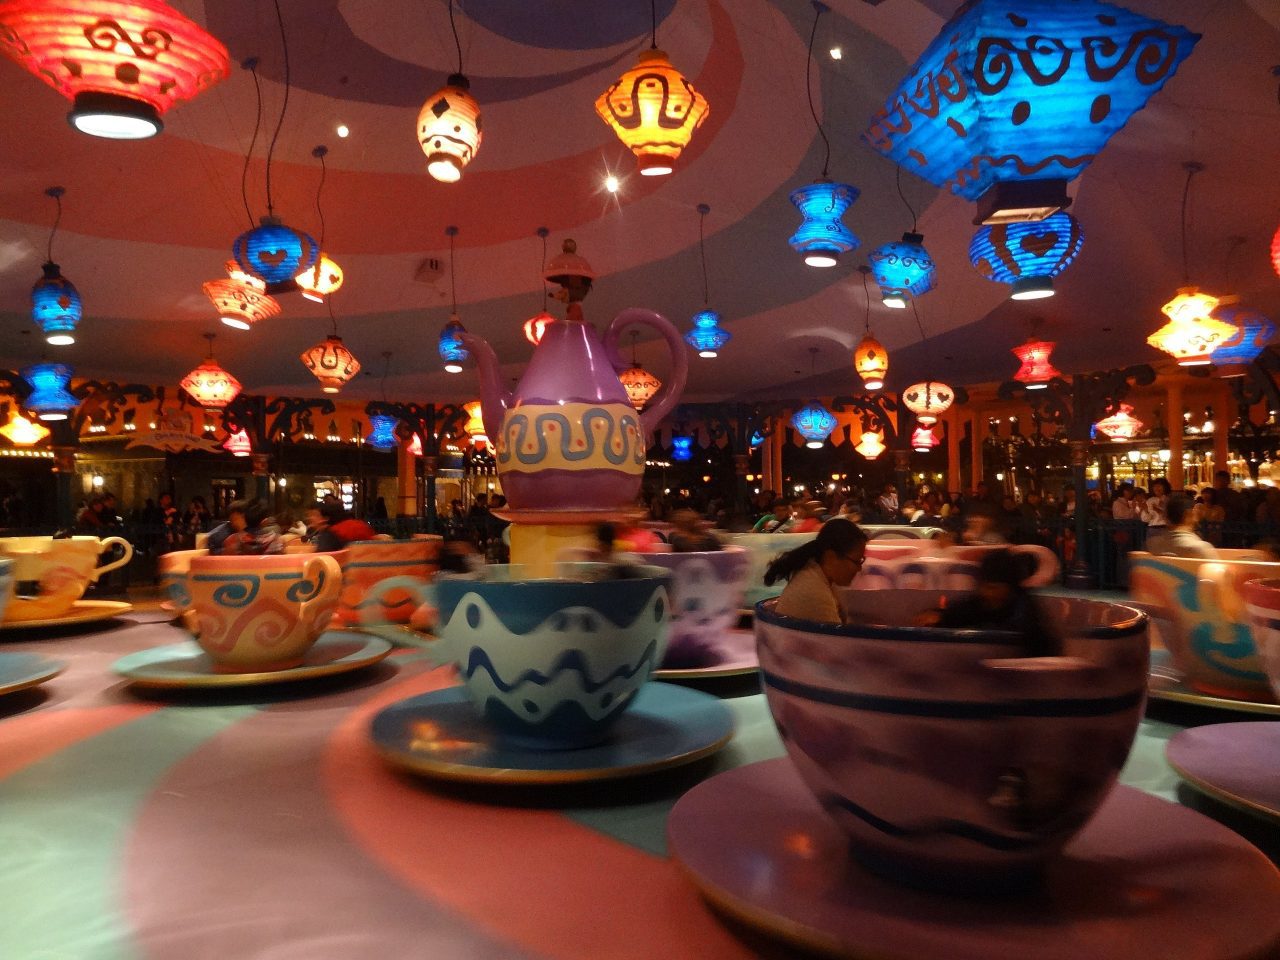 Alice's_Tea_Party by Freddo via Wikimedia Commons